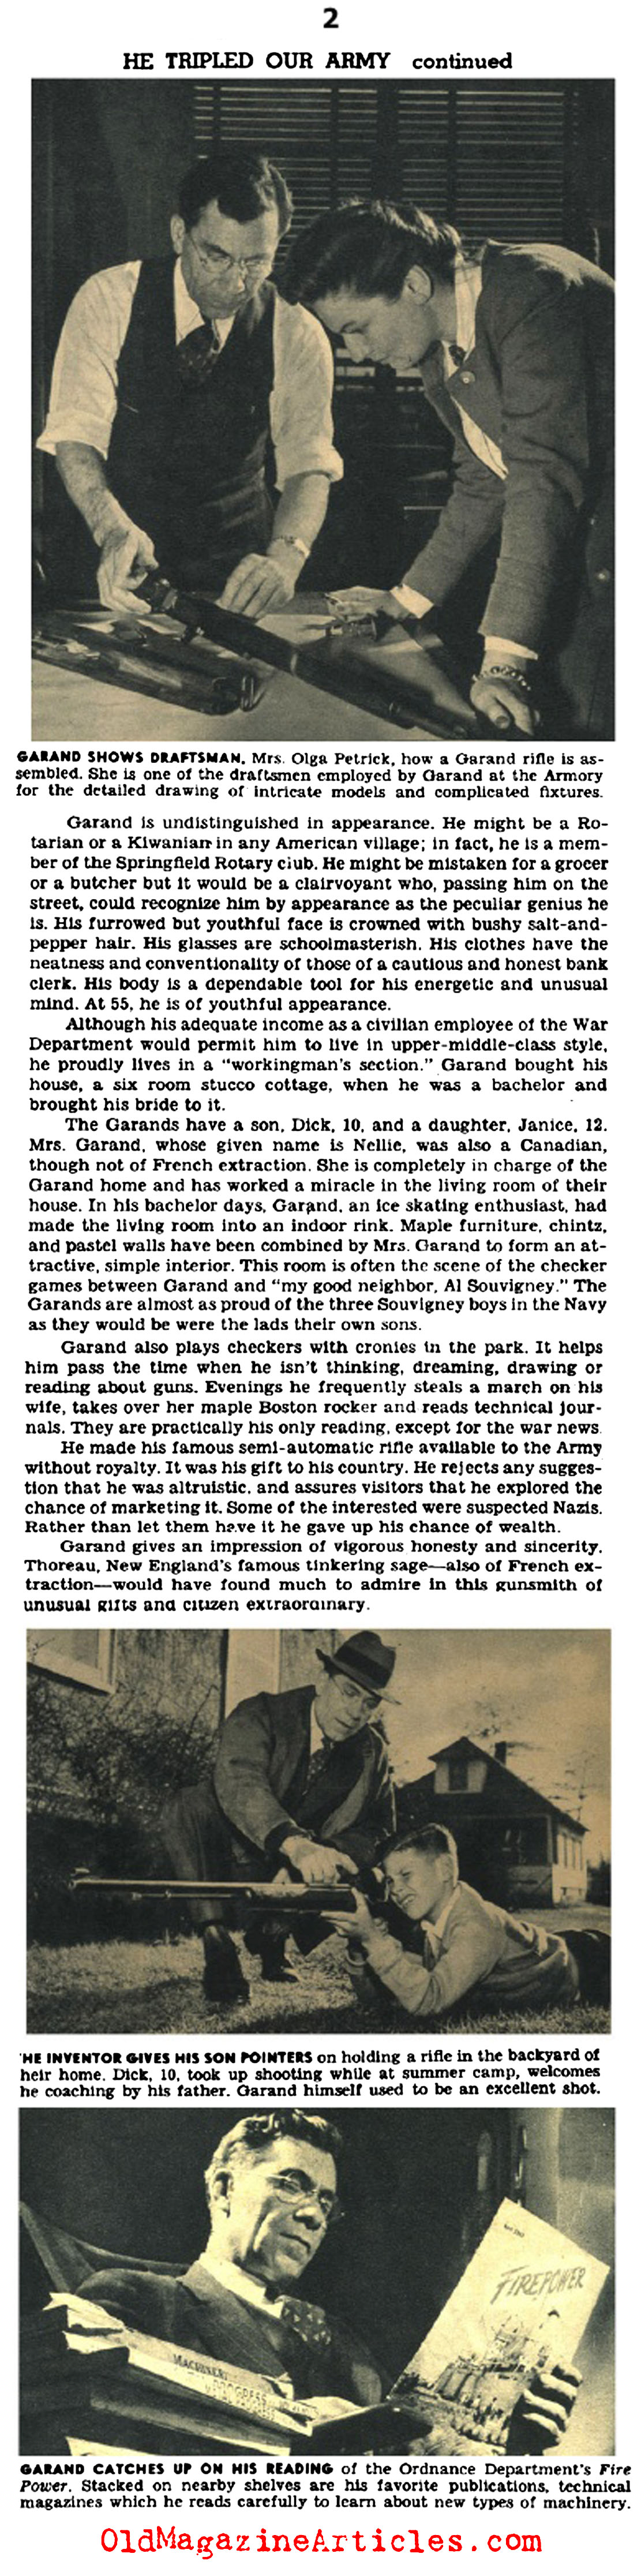 John Garand: Inventor of the M1 Garand (Click Magazine, 1944)